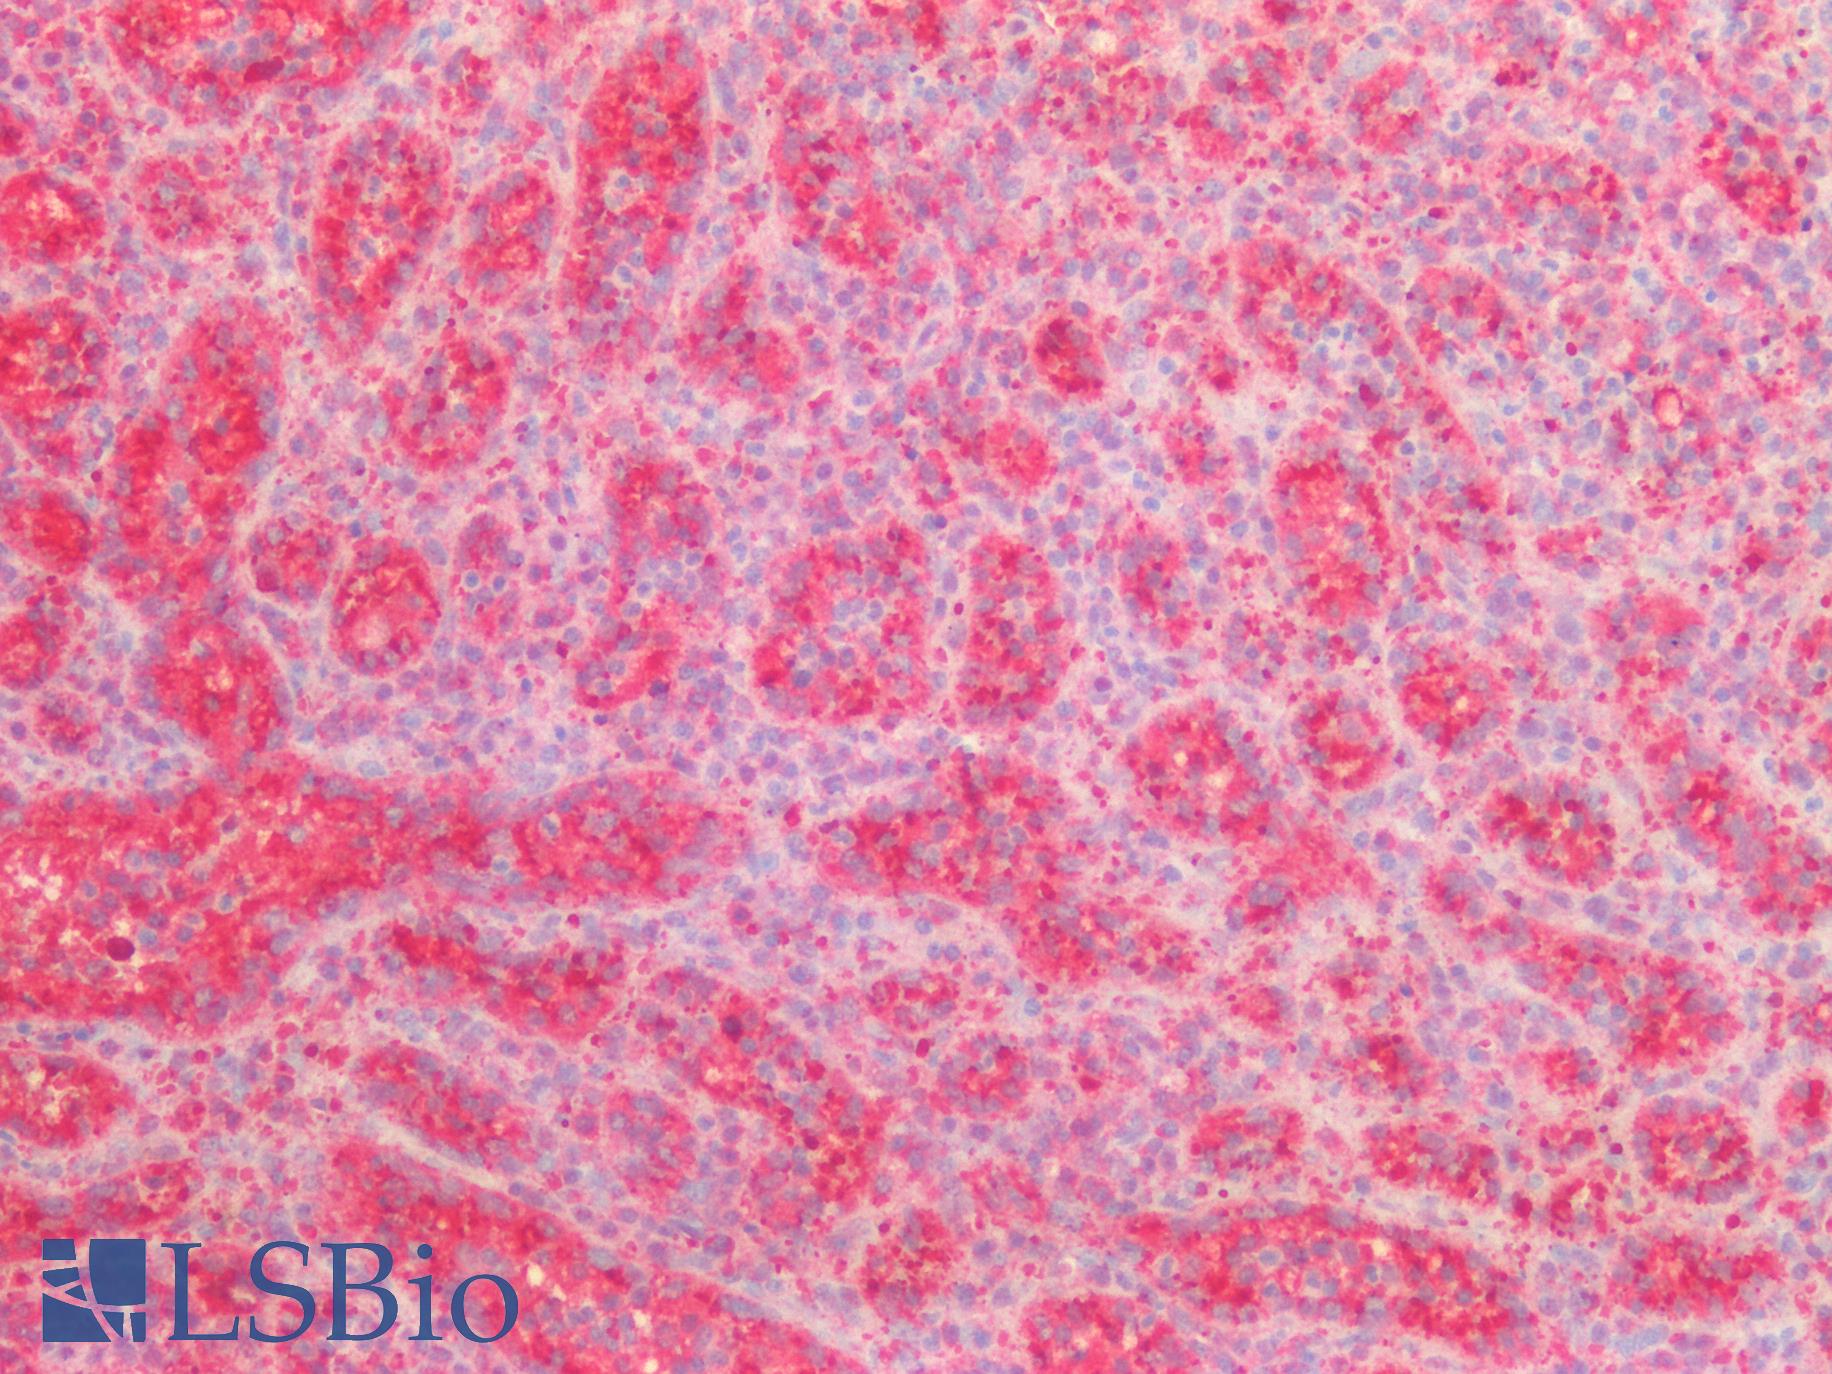 VPS37A Antibody - Human Spleen: Formalin-Fixed, Paraffin-Embedded (FFPE)